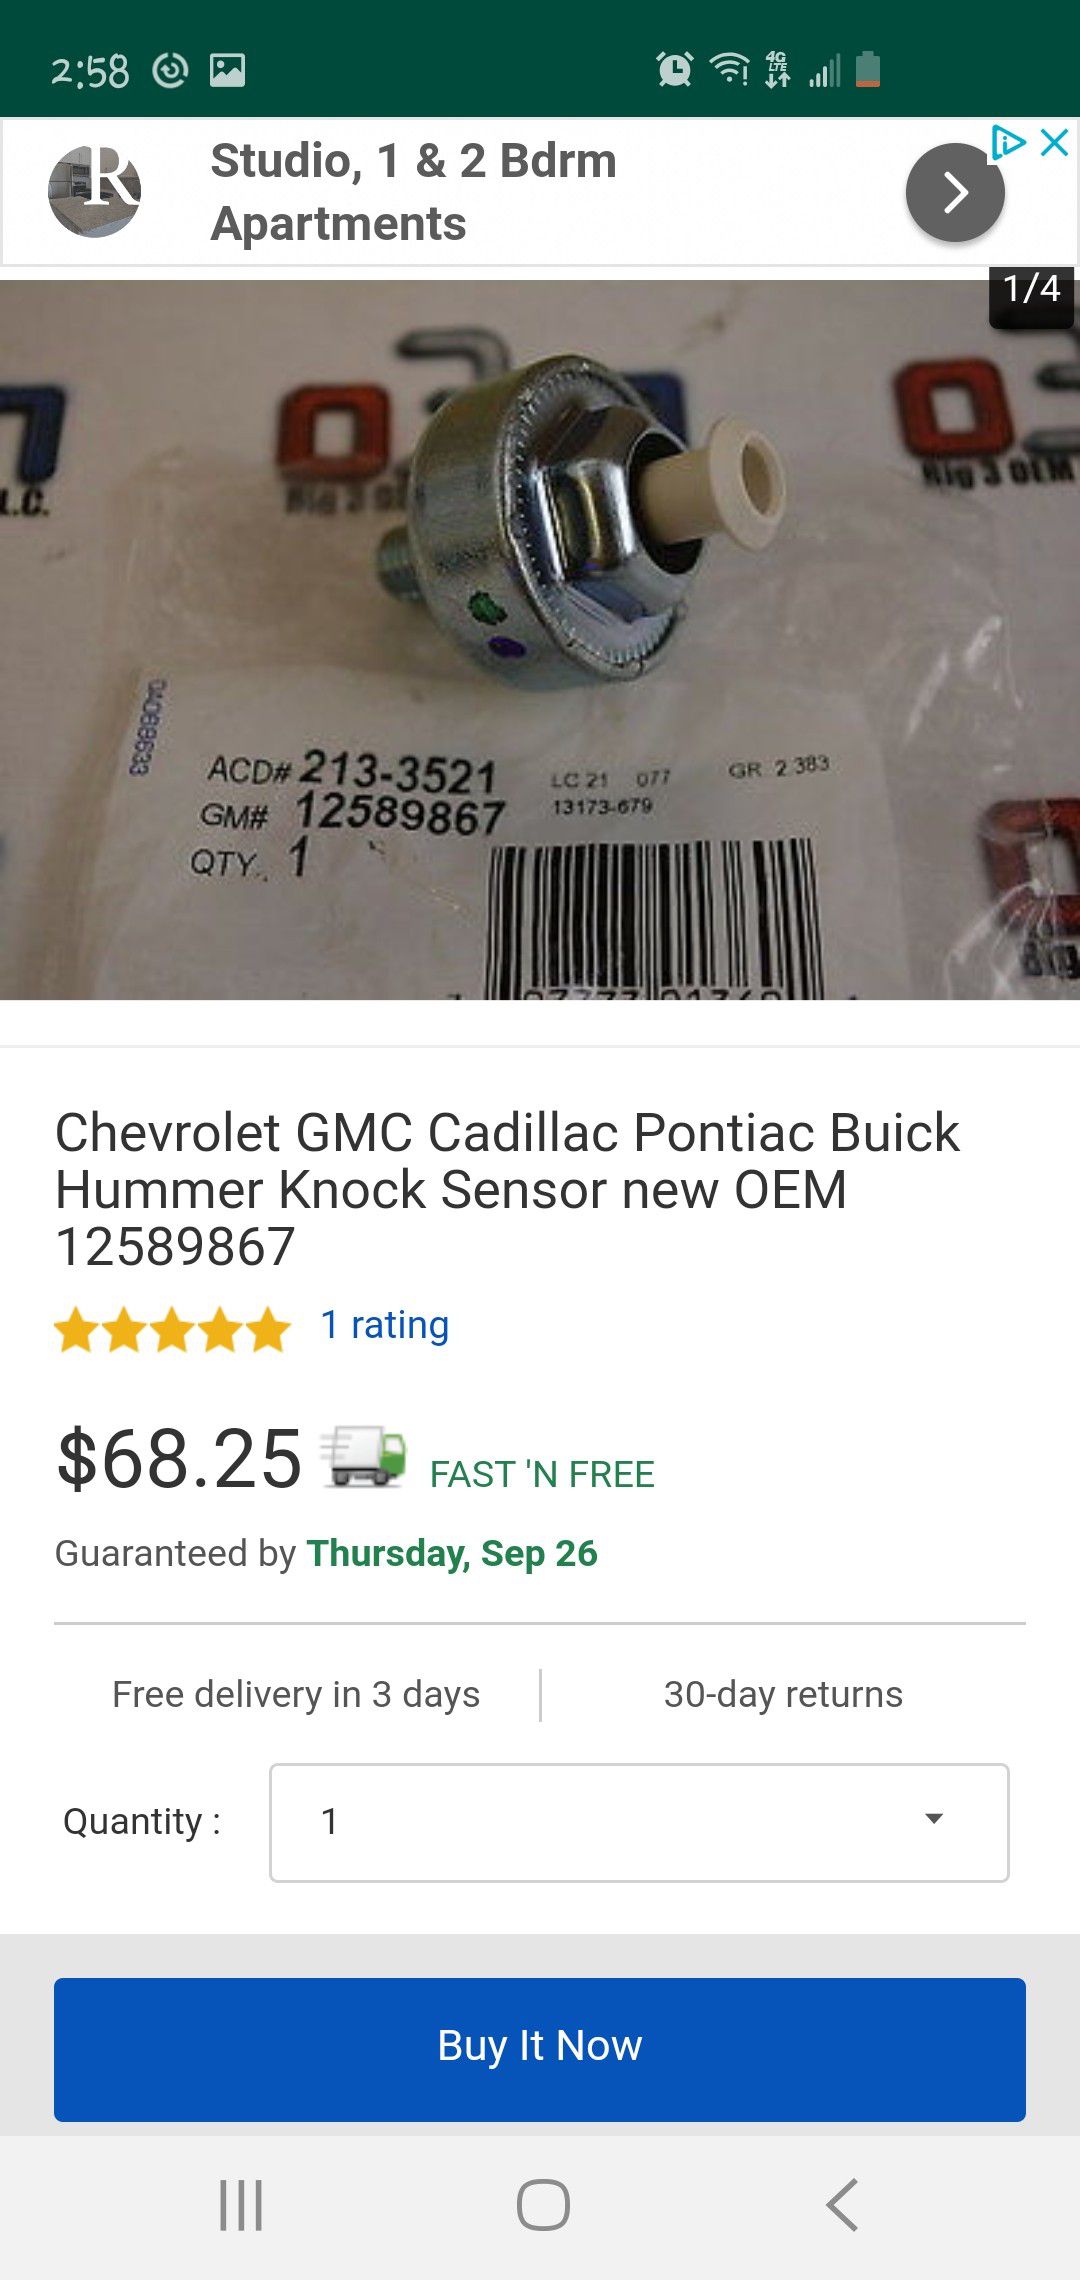 Chevrolet GMC Cadillac Pontiac Buick Hummer Knock Sensor new OEM 12589867